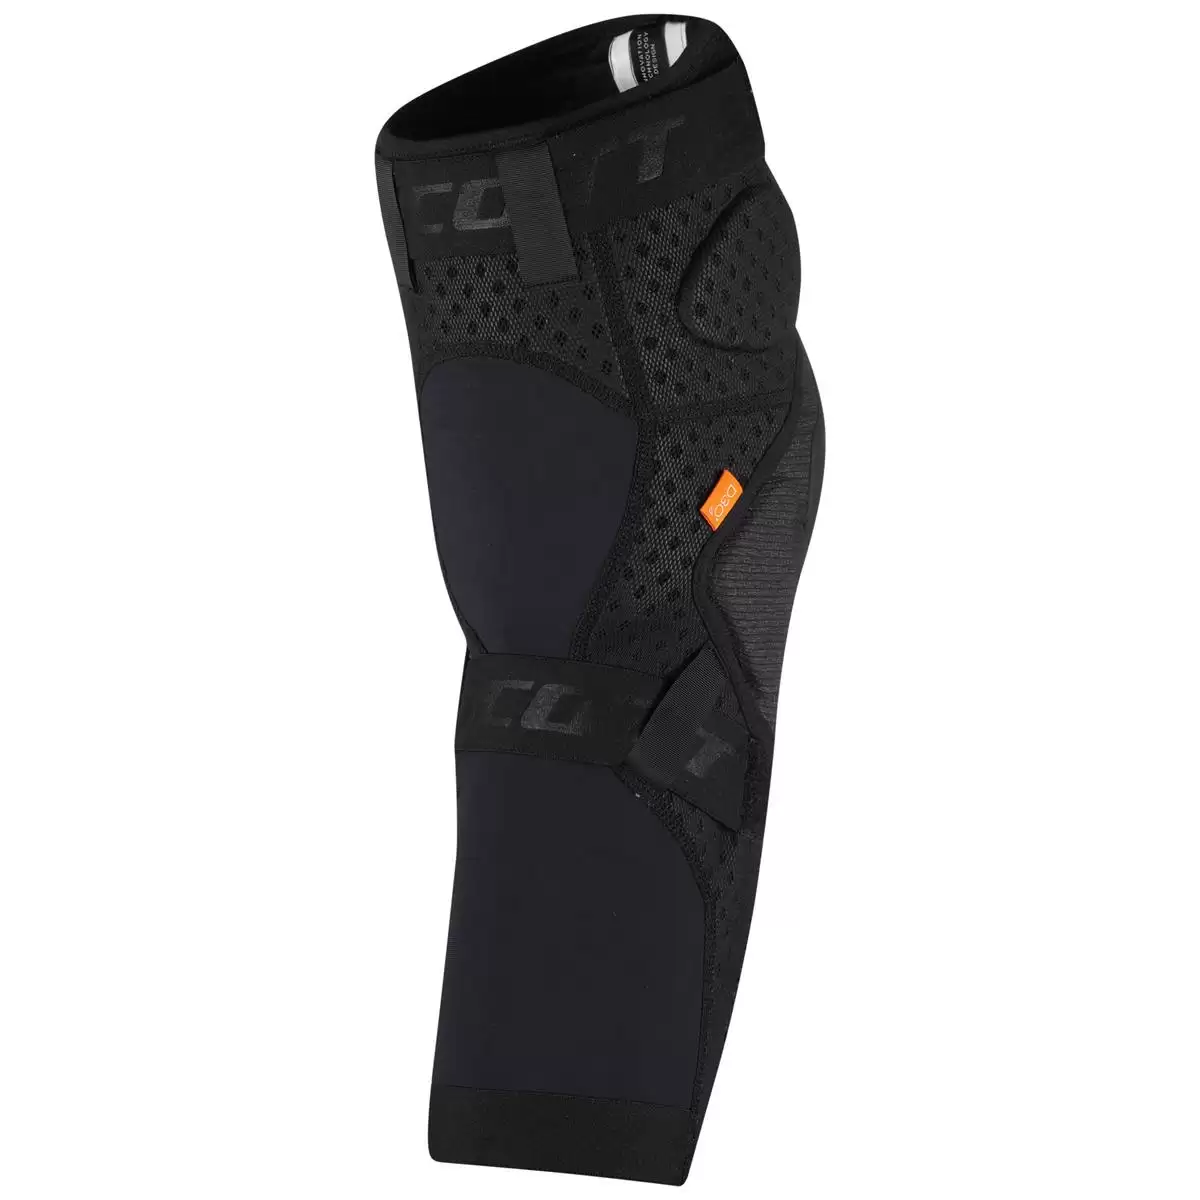 Knee pads Softcon 2 Black/Grey - Size S #1